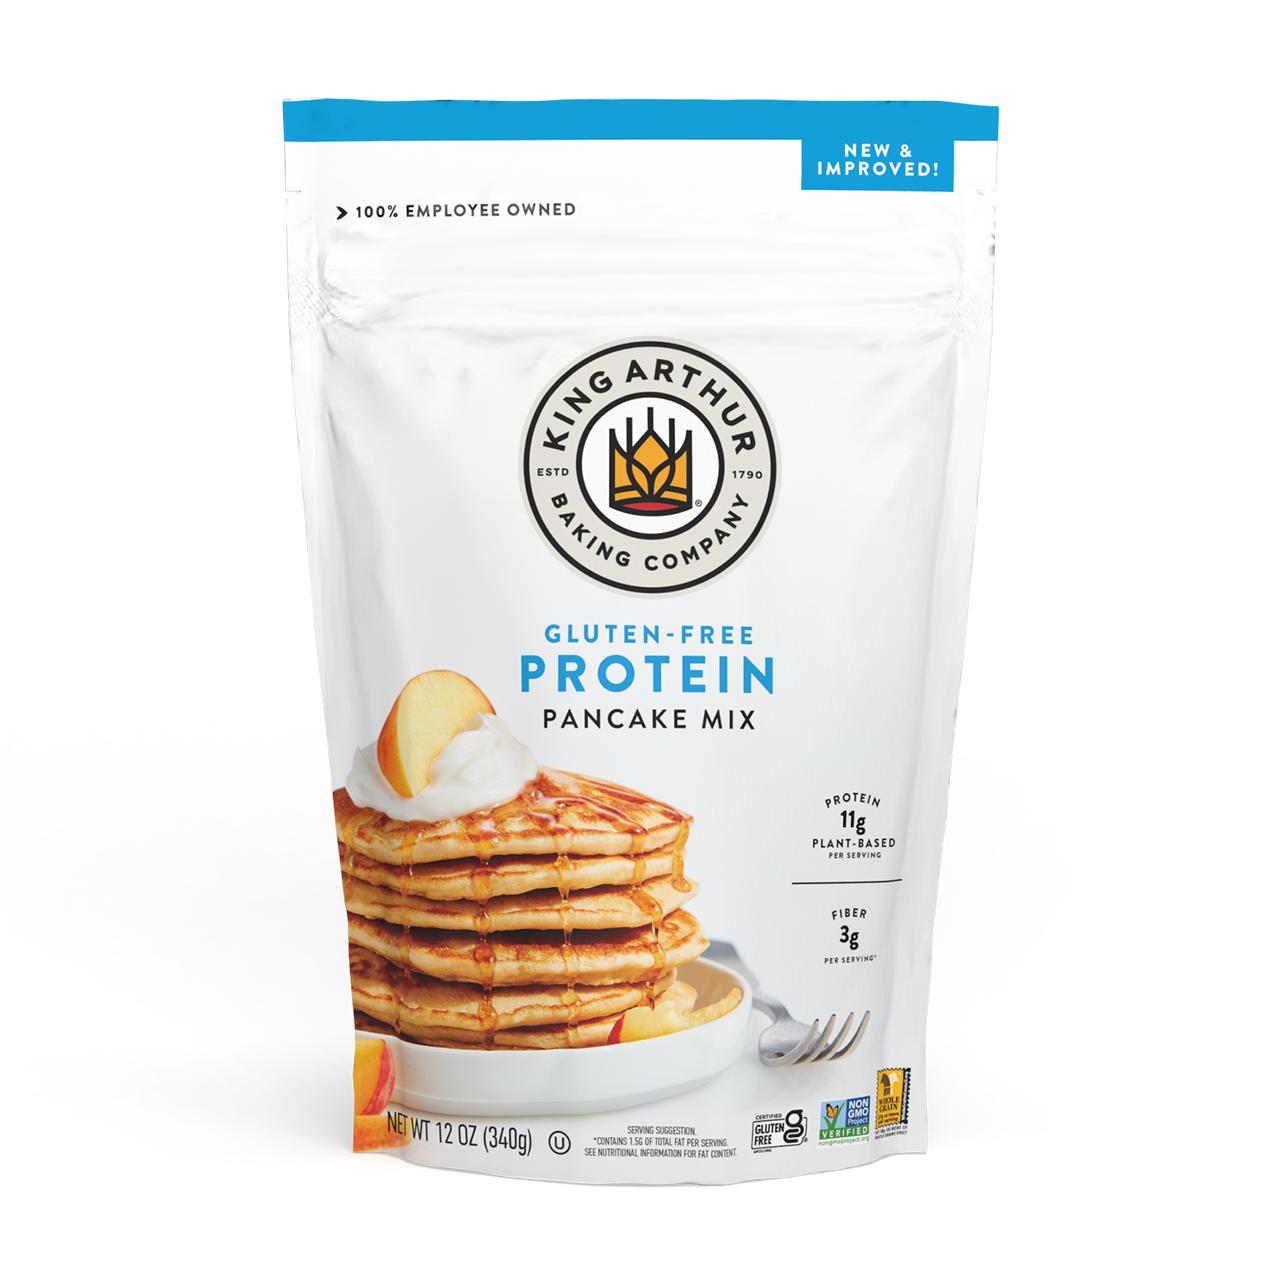 Gluten-Free Protein Pancake Mix - King Arthur Baking Company